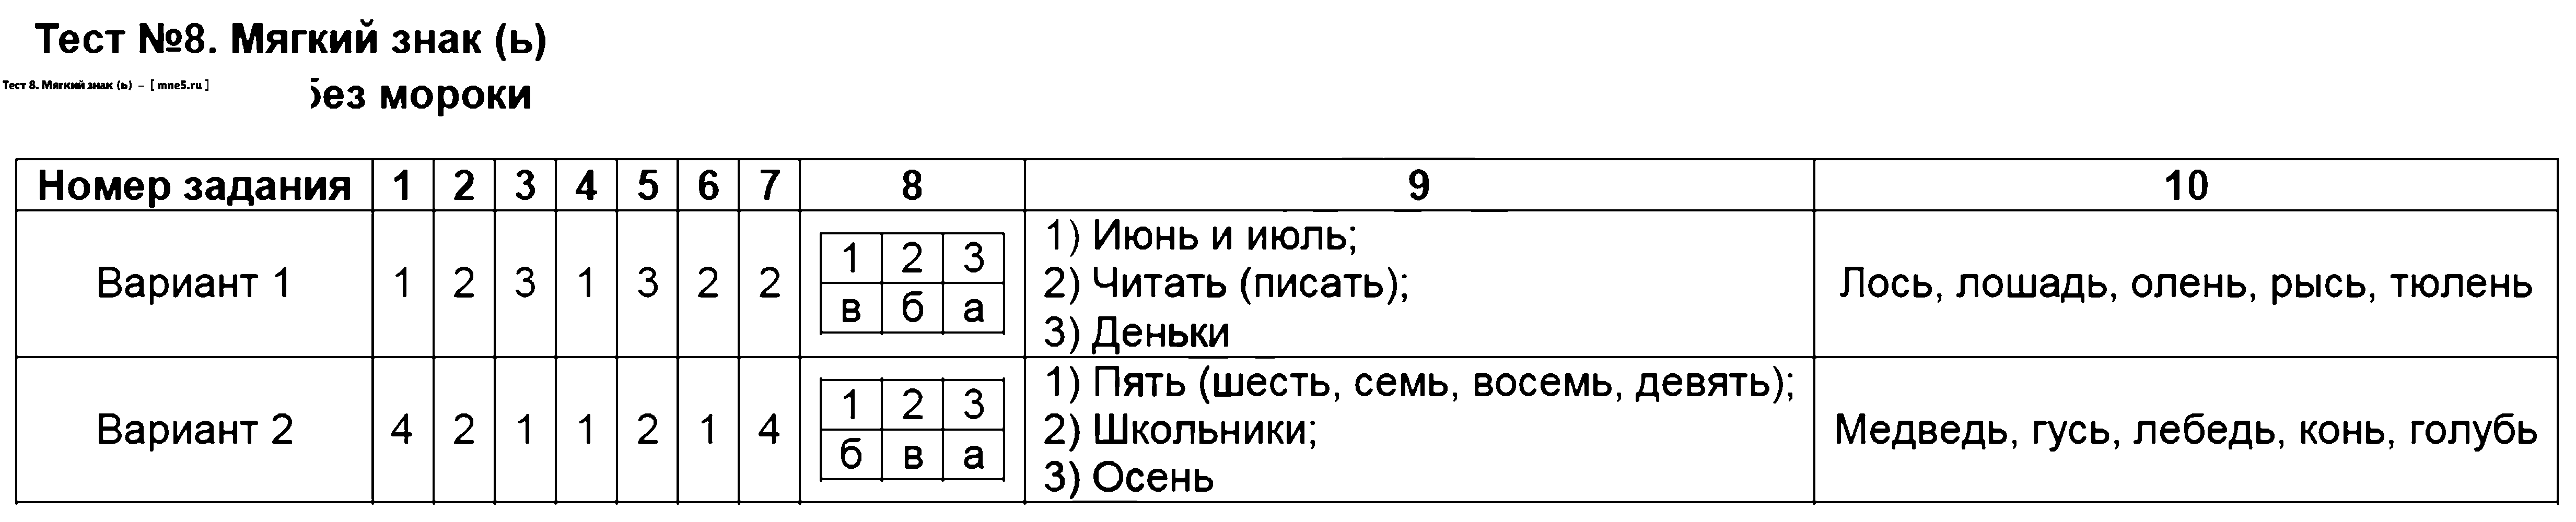 ГДЗ Русский язык 2 класс - Тест 8. Мягкий знак (ь)